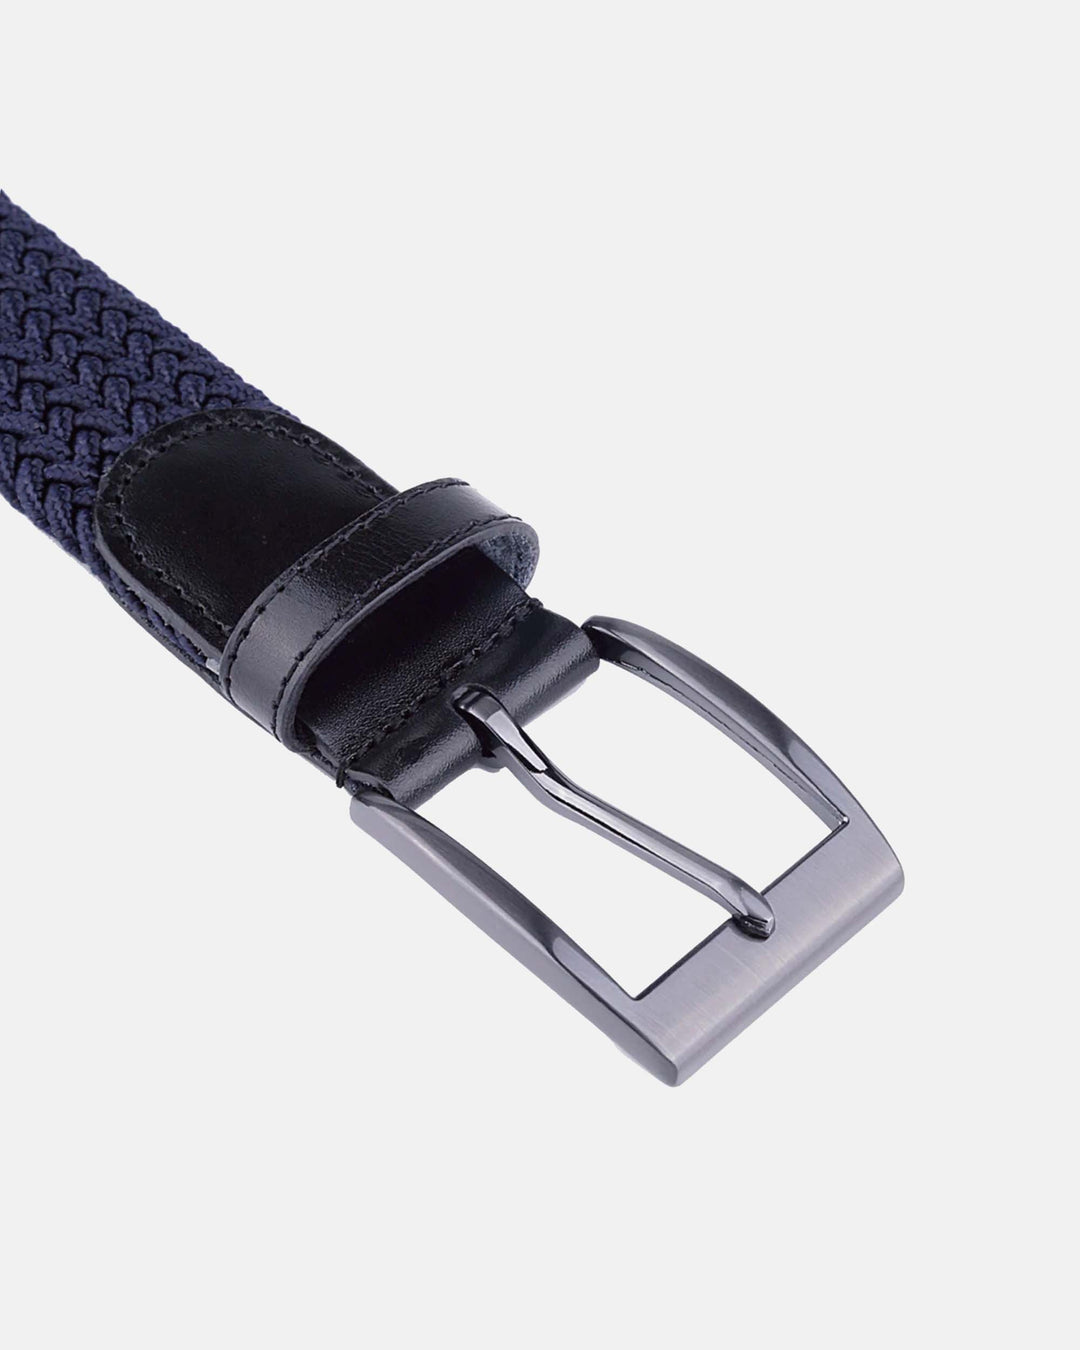 Stretch Web Golf Belt in Navy Blue